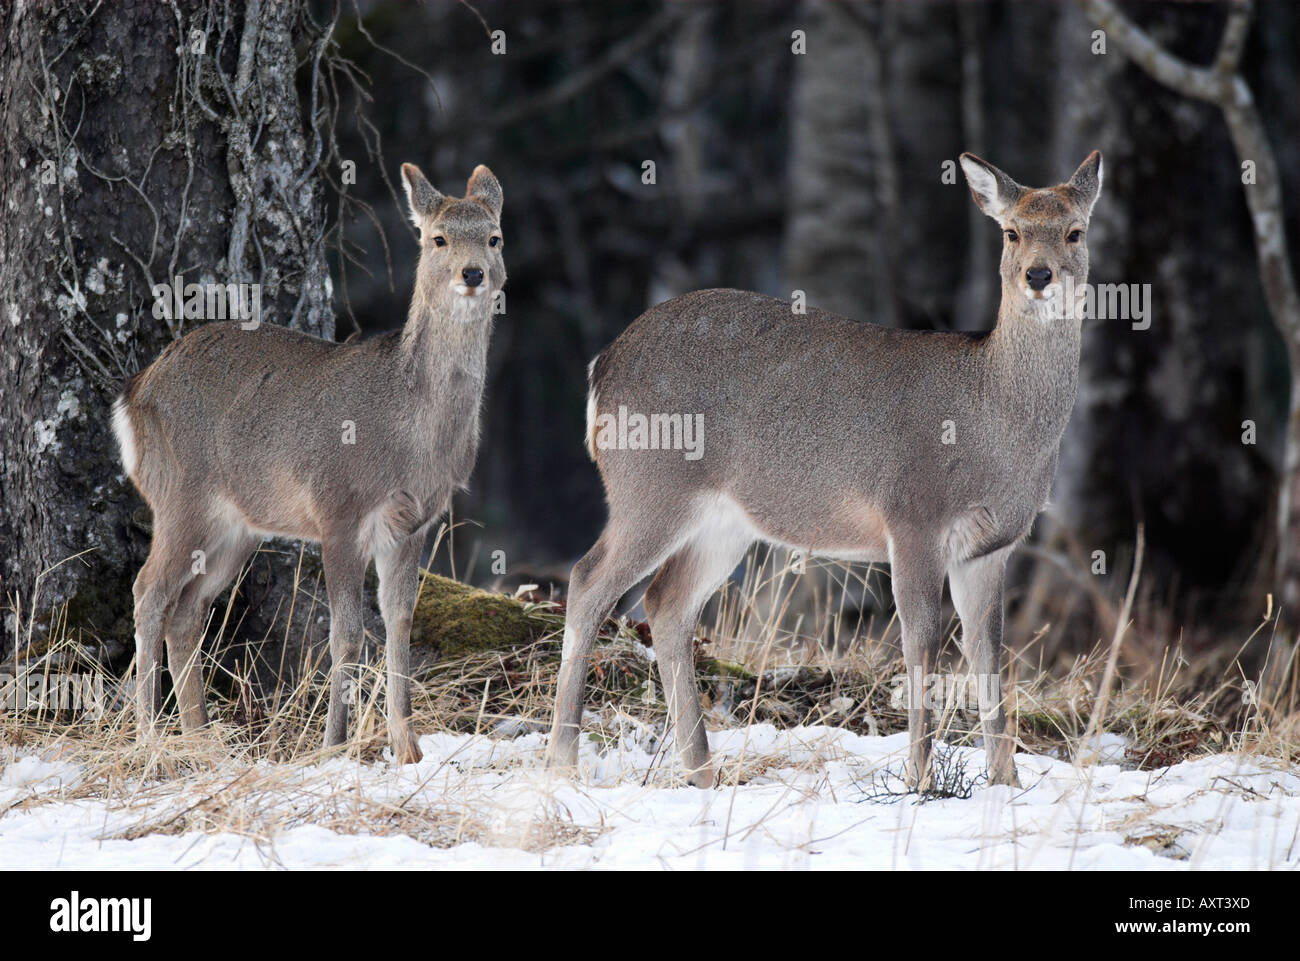 Sika deer Cervus nippon alert at edge of woodland Nemuro Region Hokkaido Island Japan Stock Photo